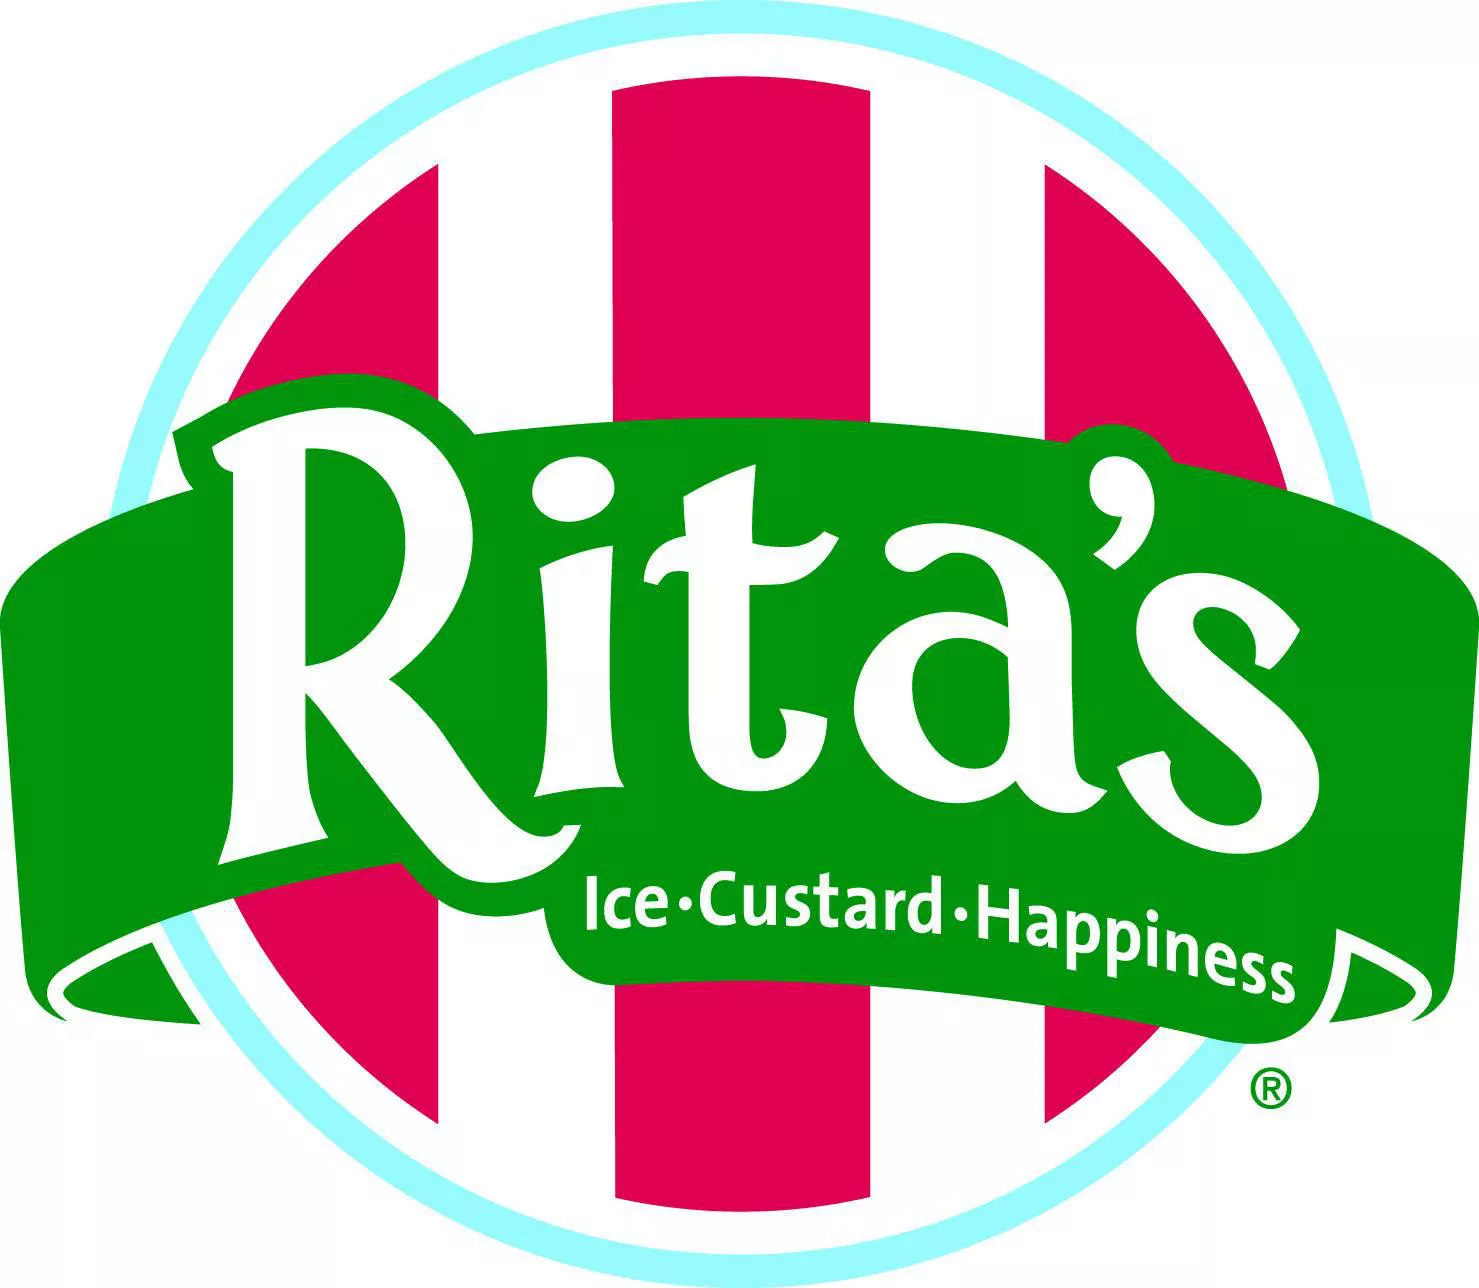 Rita's Italian Ice & Frozen Custard (Hialeah, FL)